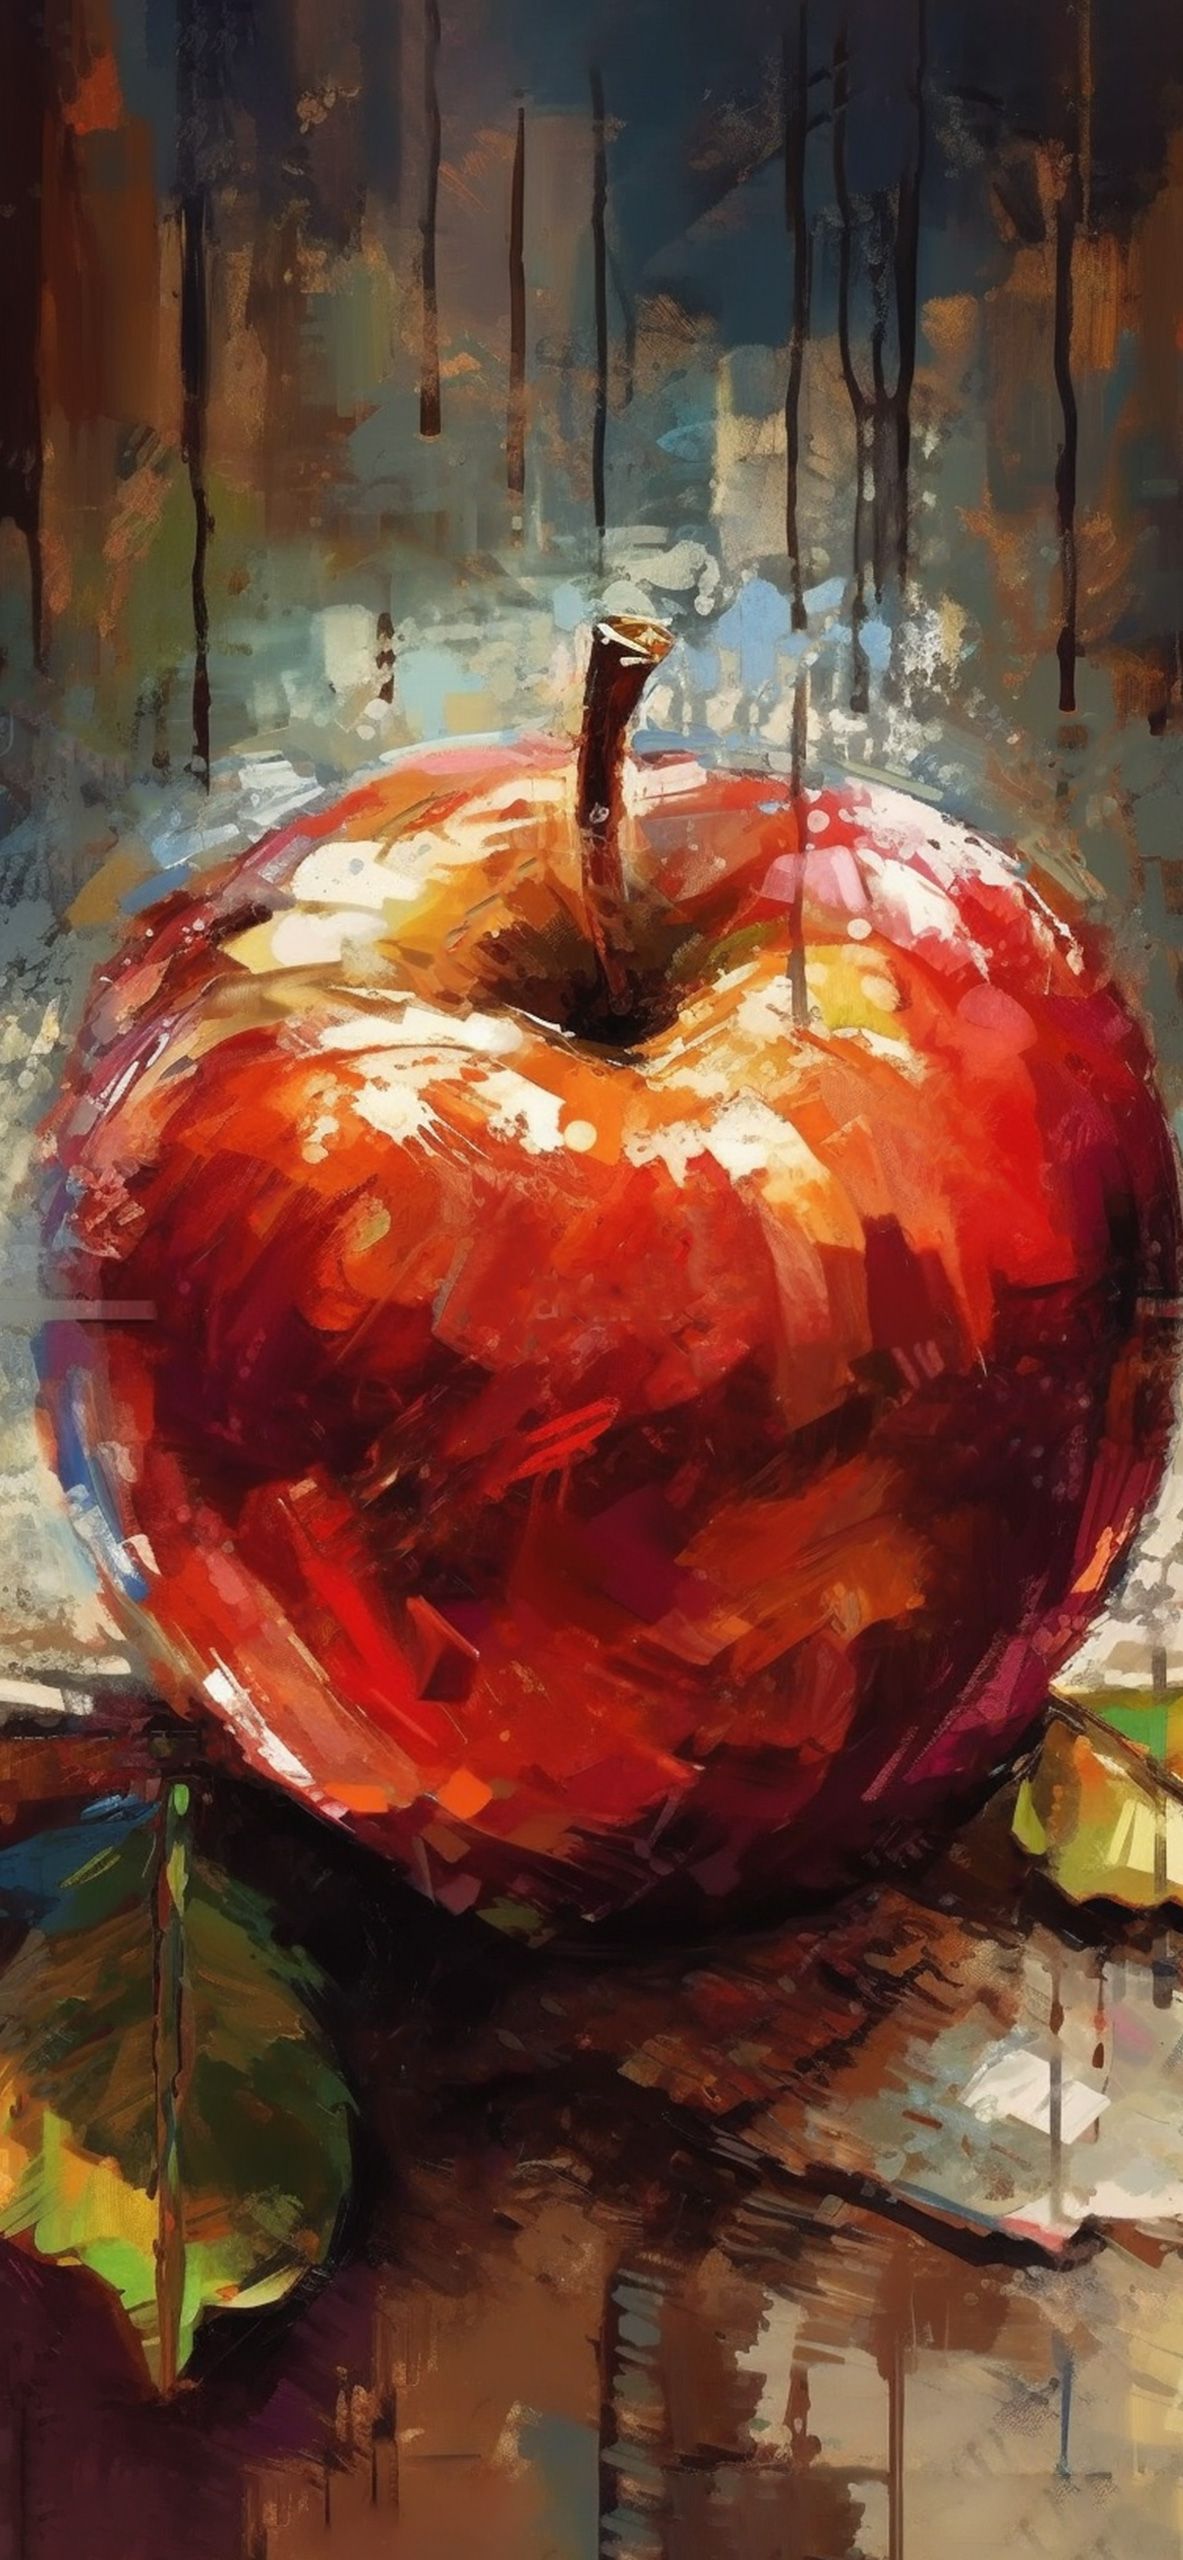 Apple Hintergrundbild 1183x2560. Red Apple Painting Wallpaper Aesthetic Wallpaper iPhone